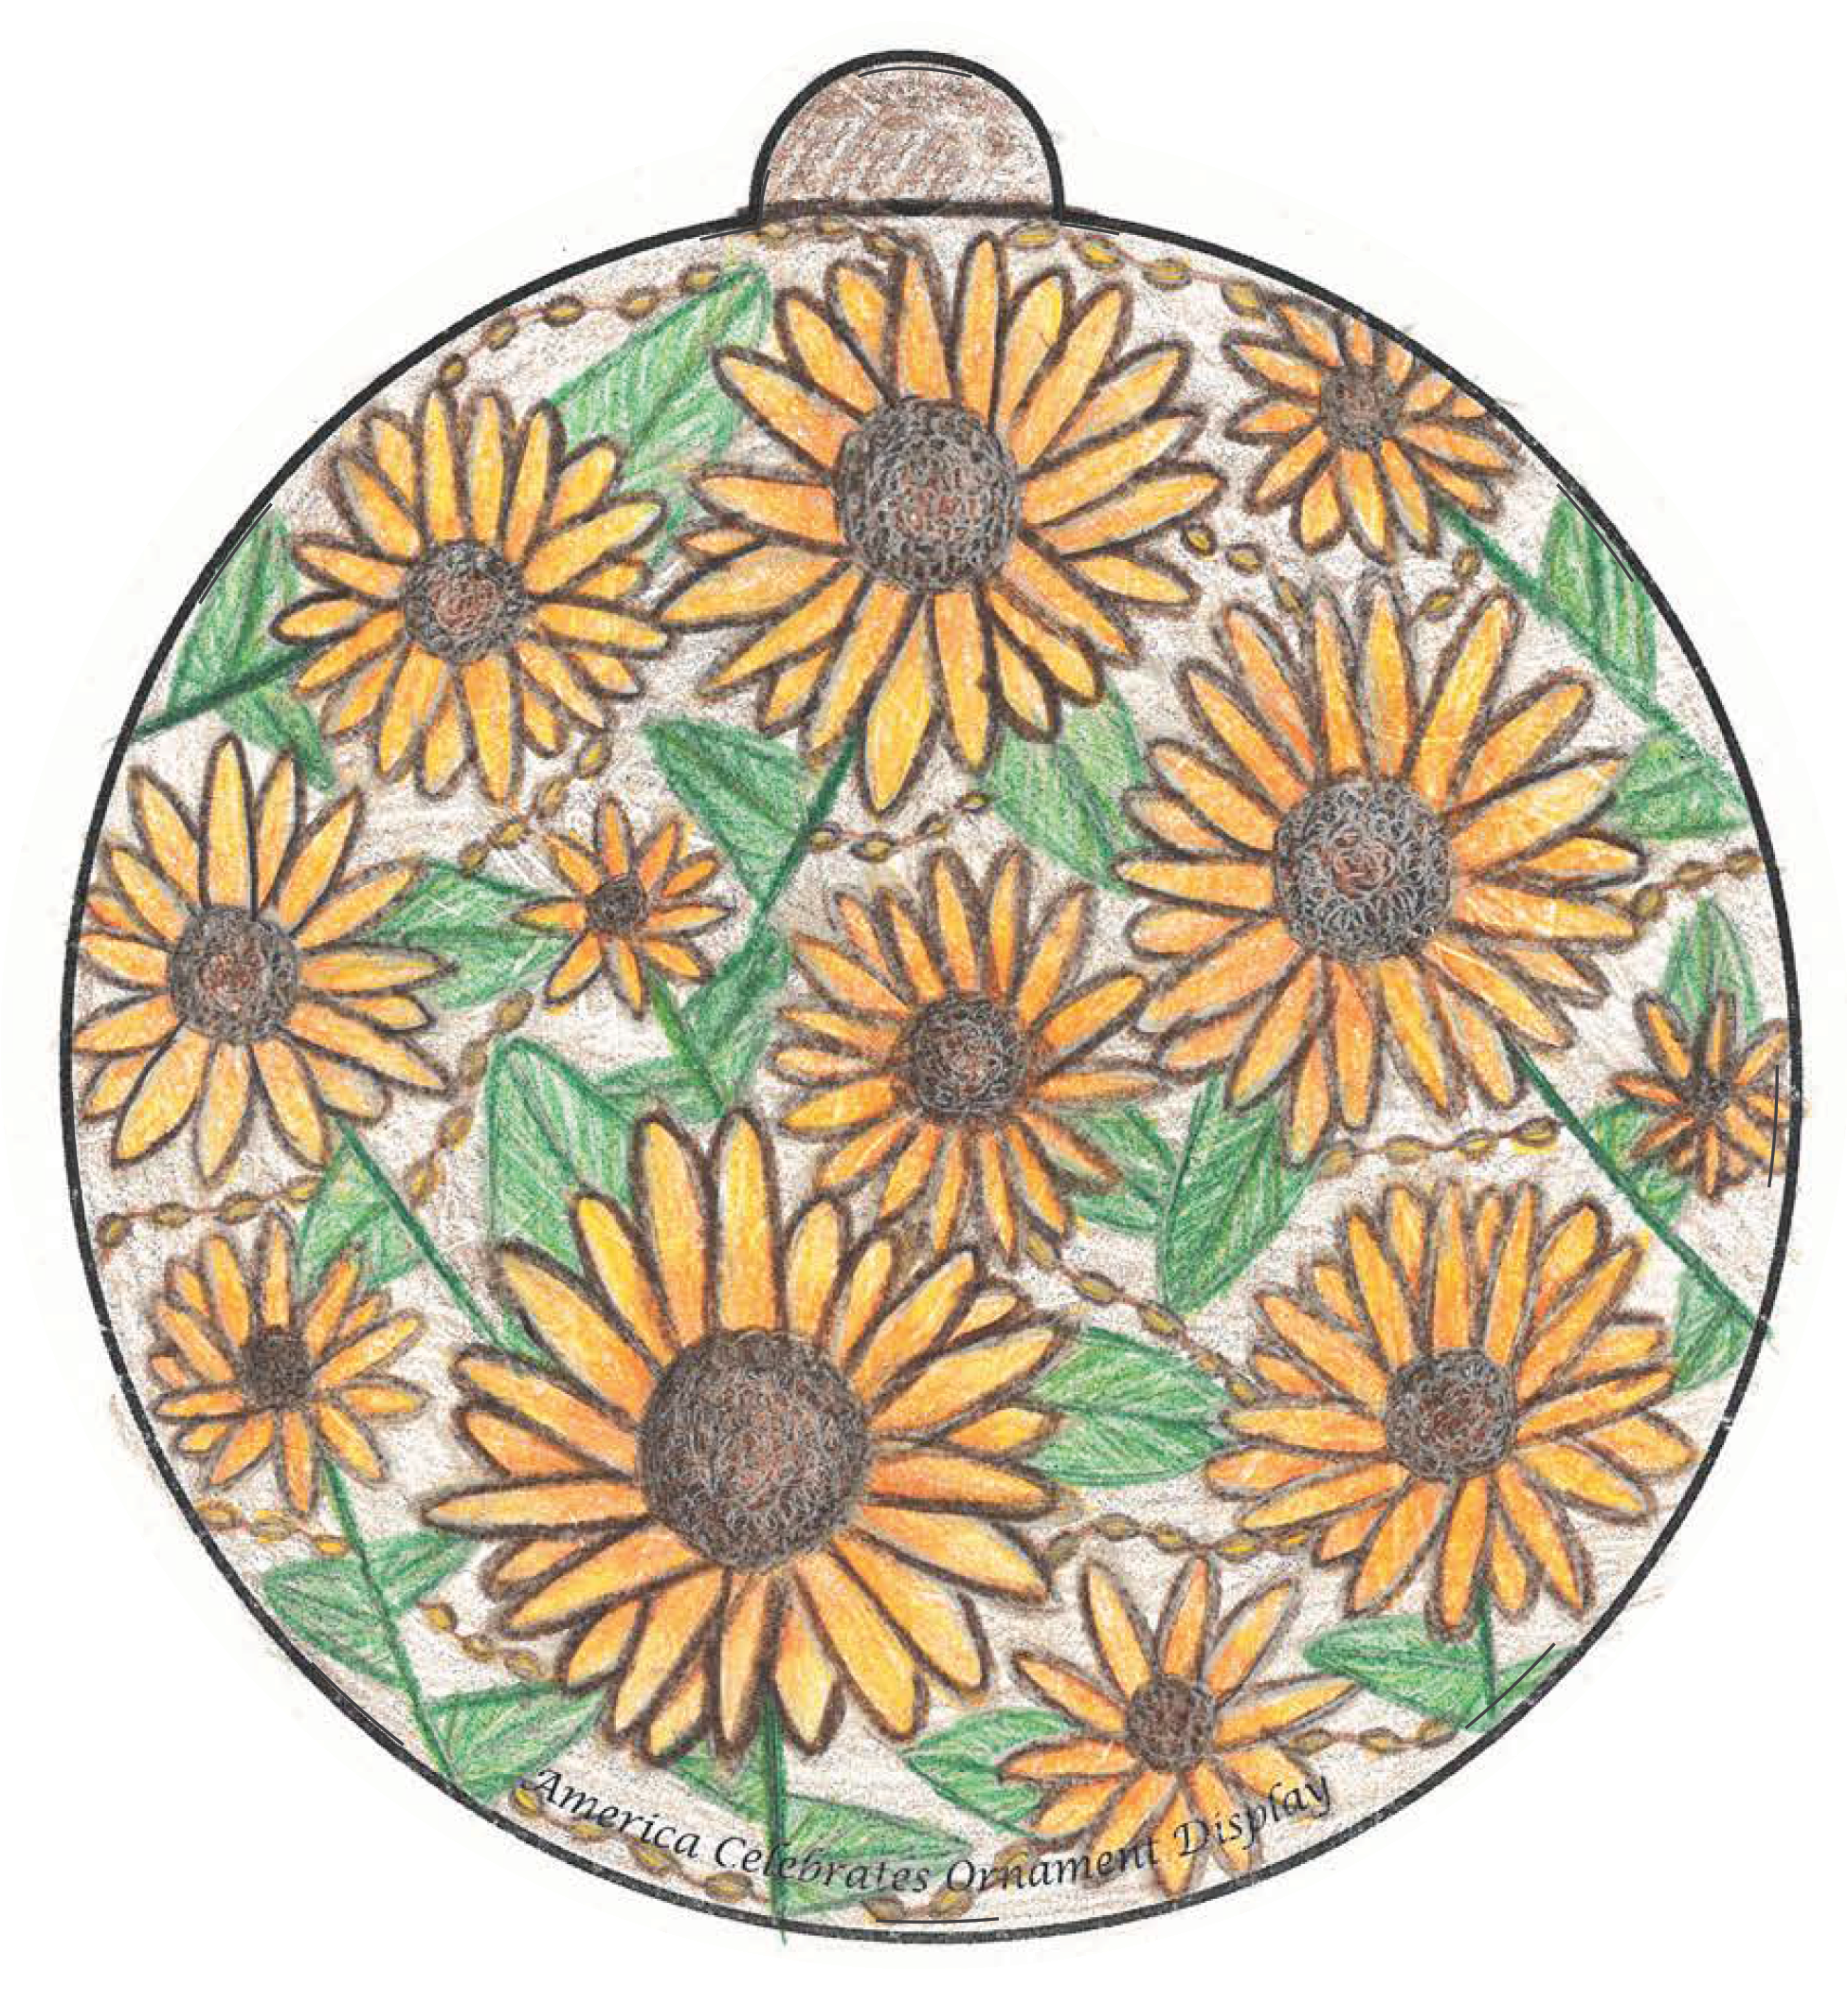 Ornament depicting sunflowers